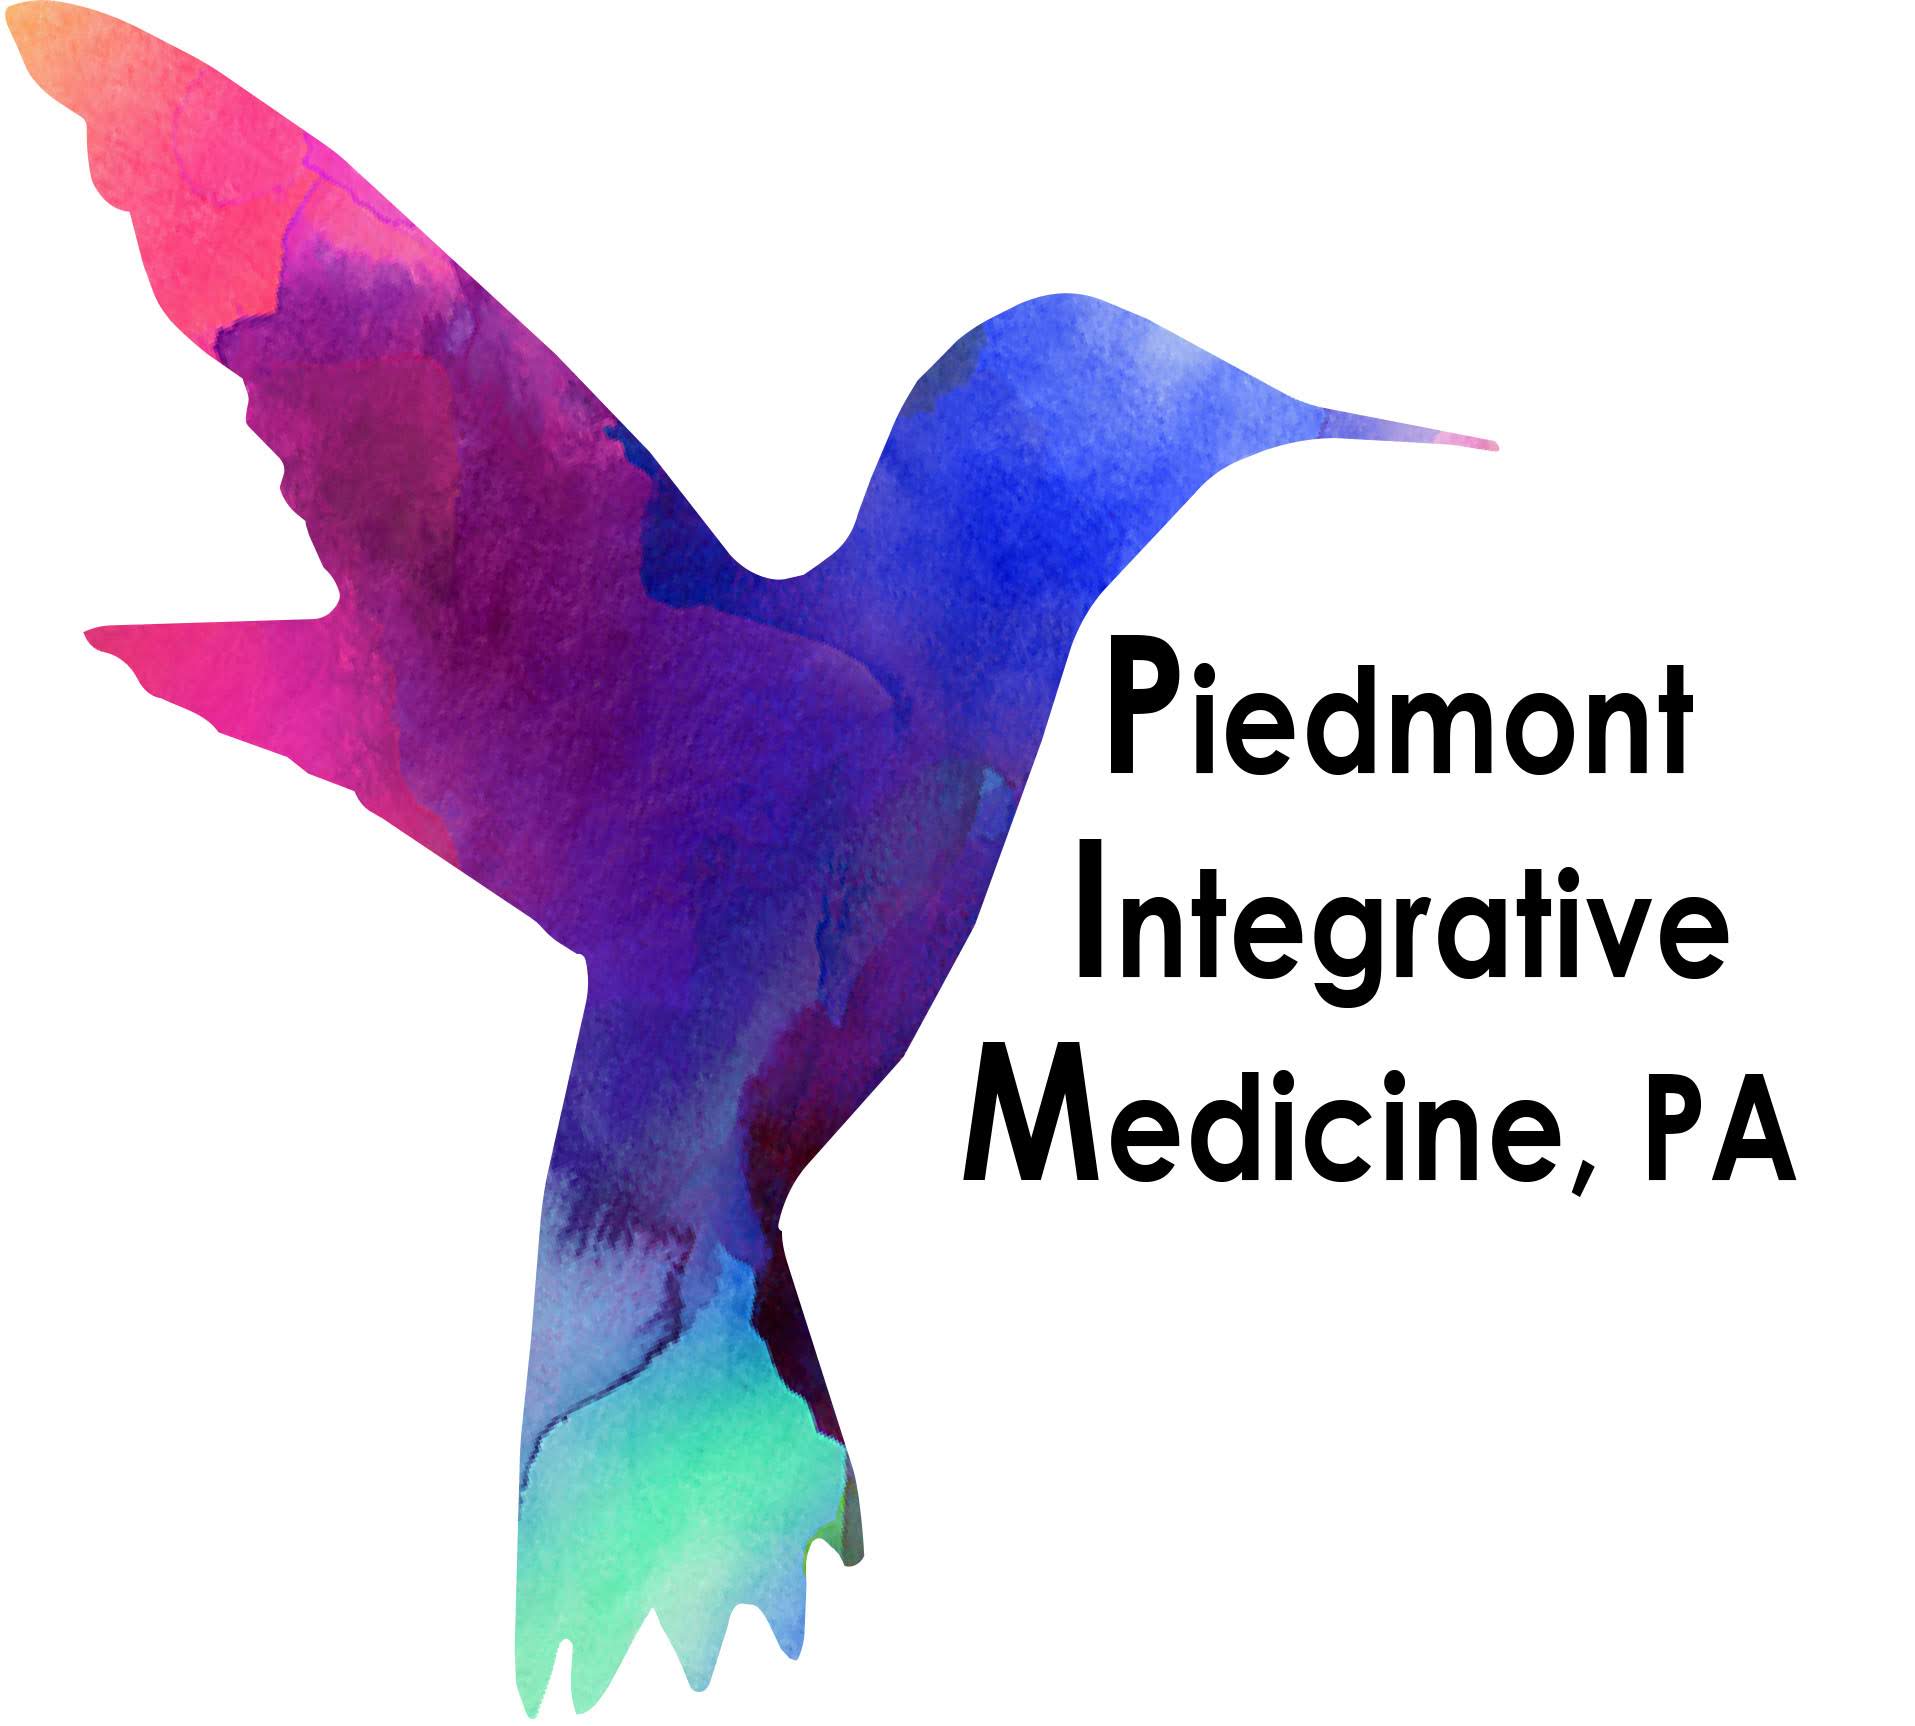 Piedmont Integrative Medicine, PA